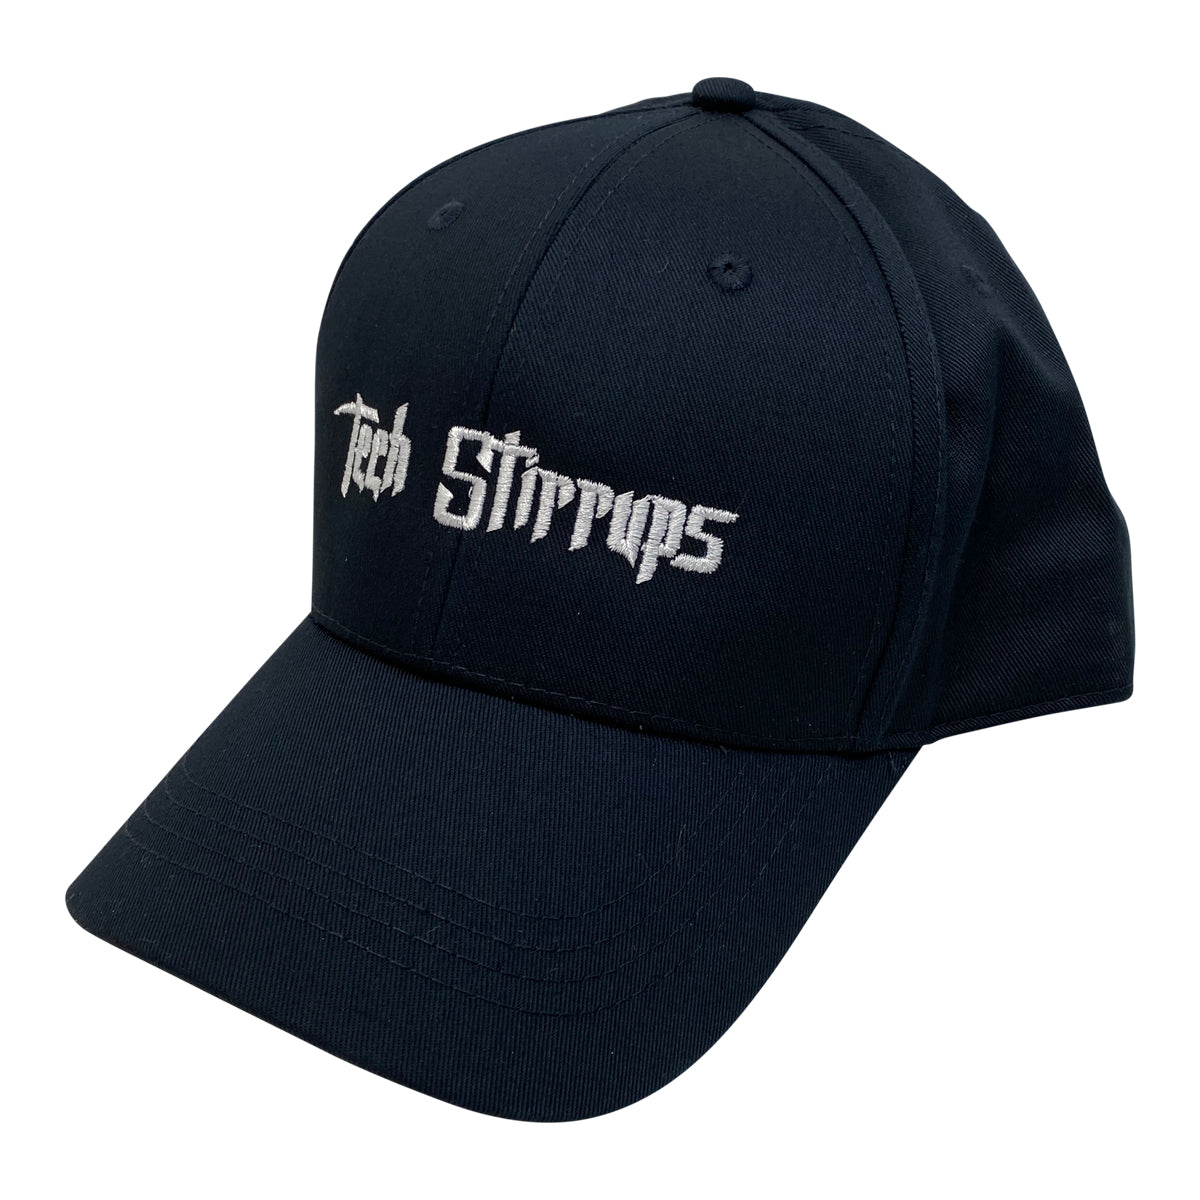 Tech Stirrups Baseball Cap in Navy